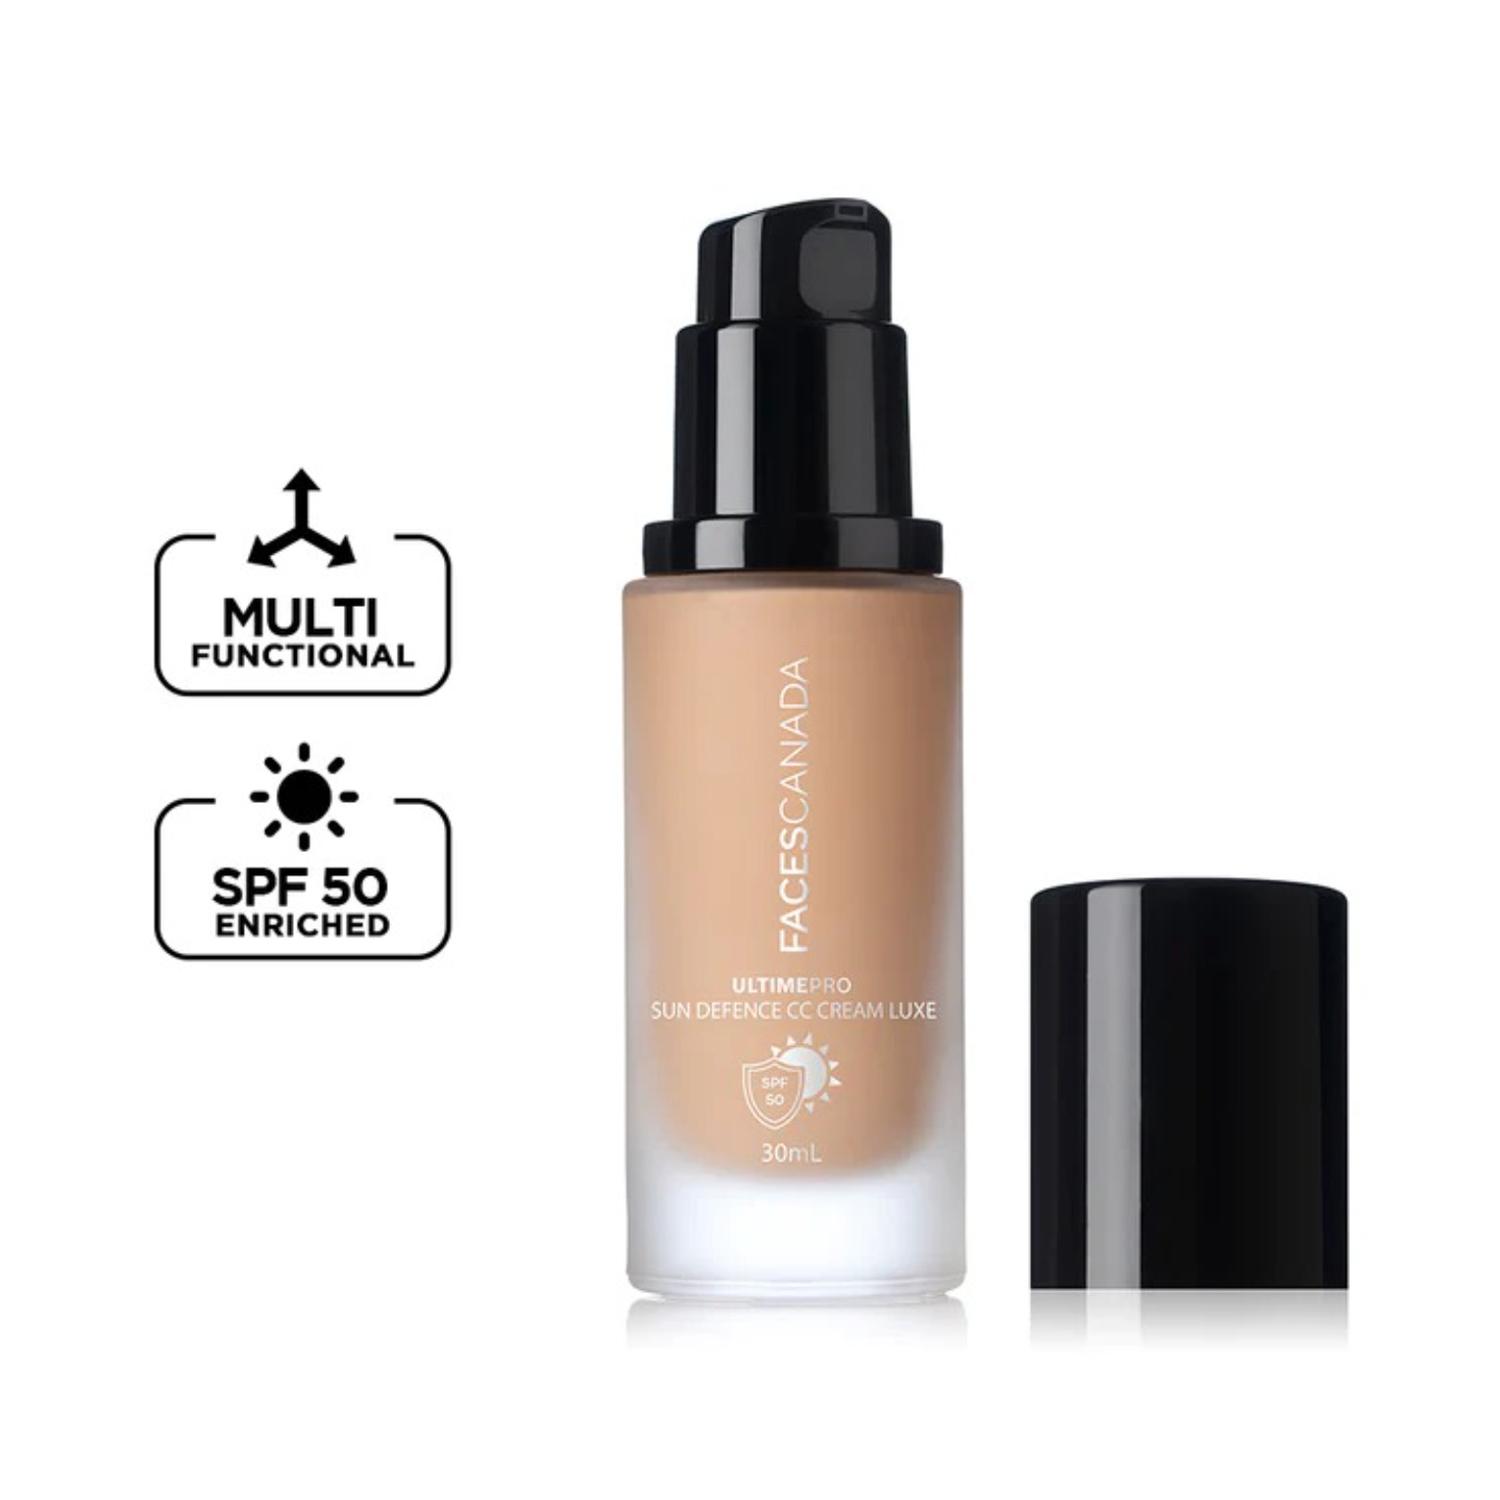 Faces Canada | Faces Canada Ultime Pro Sun Defense CC Cream Luxe SPF 50 - Ivory, Brightens Dull Complexion (30 ml)